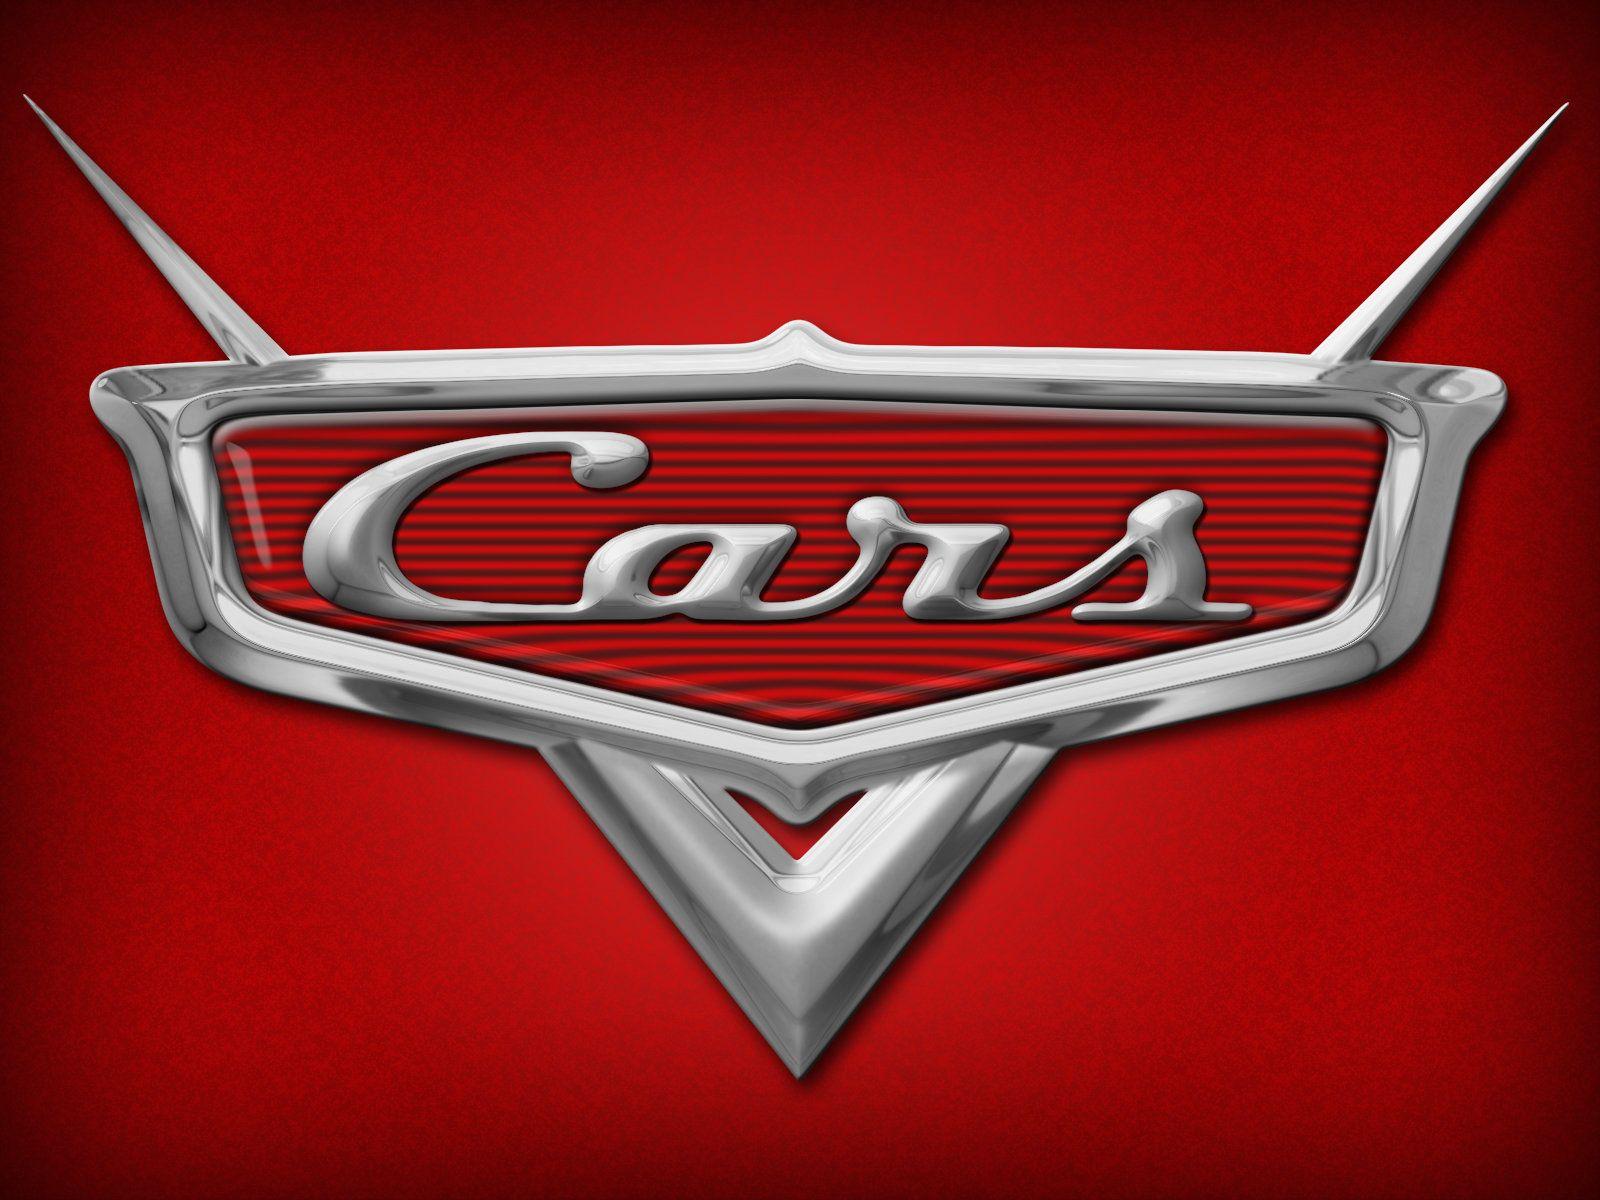 Cars 2 Logo - Cars Logo PSD by vicing on DeviantArt